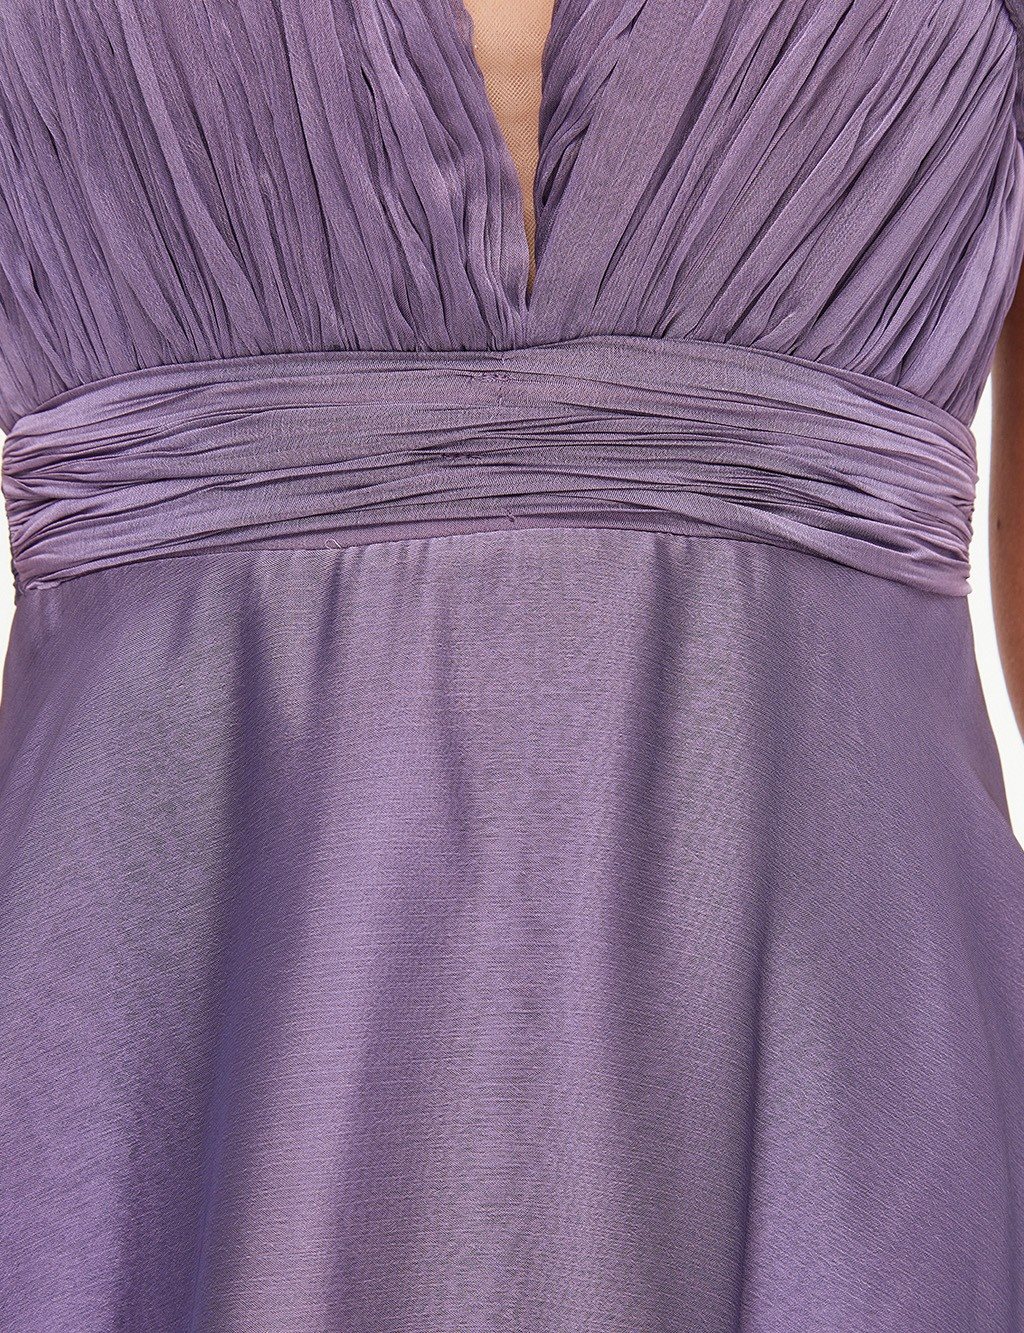 TIARA Deep V-Neck Layered Evening Dress Violet